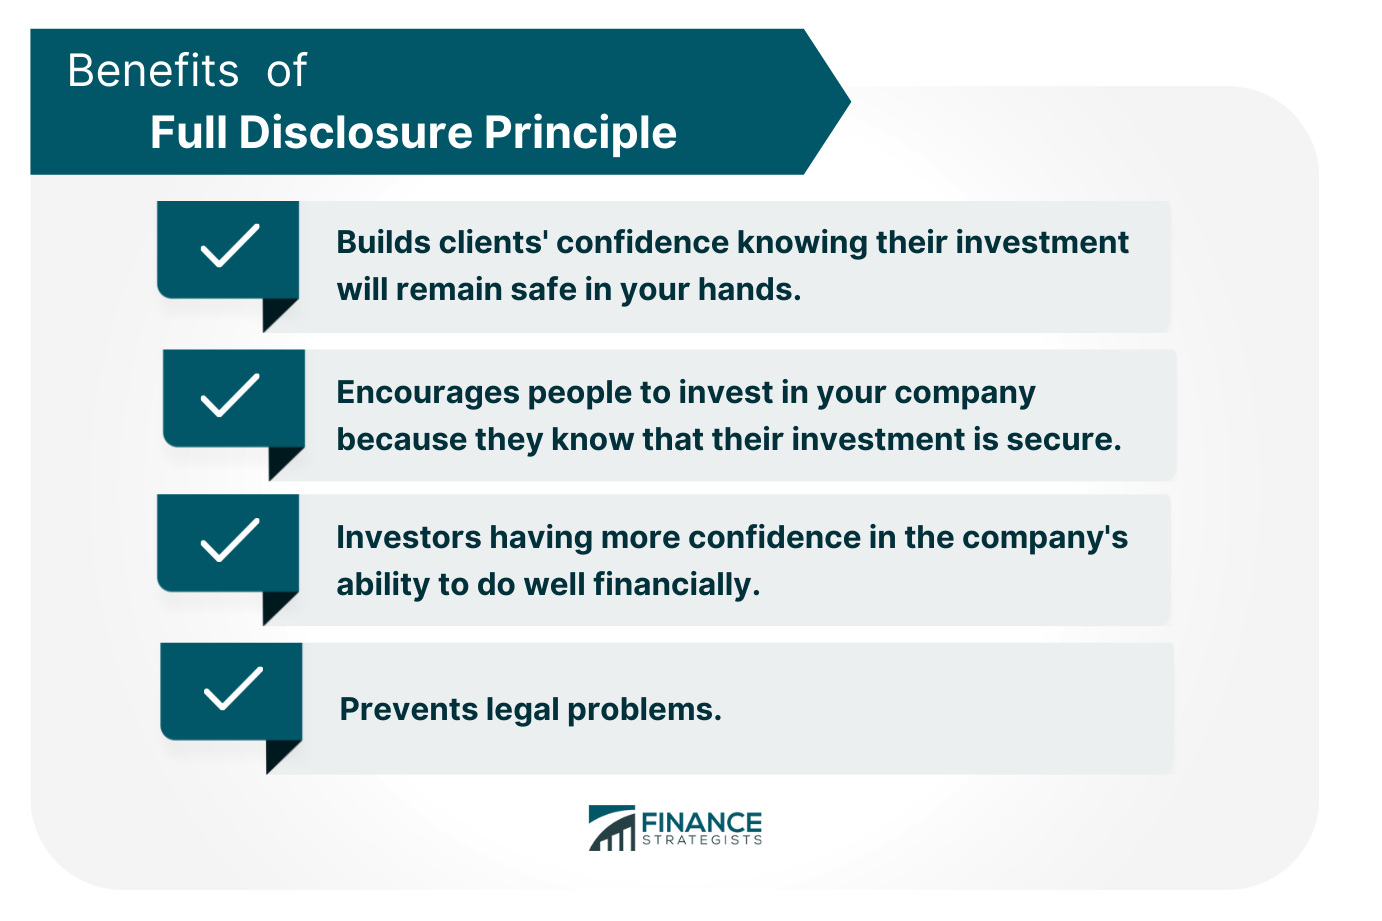 Benefits of Full Disclosure Principle